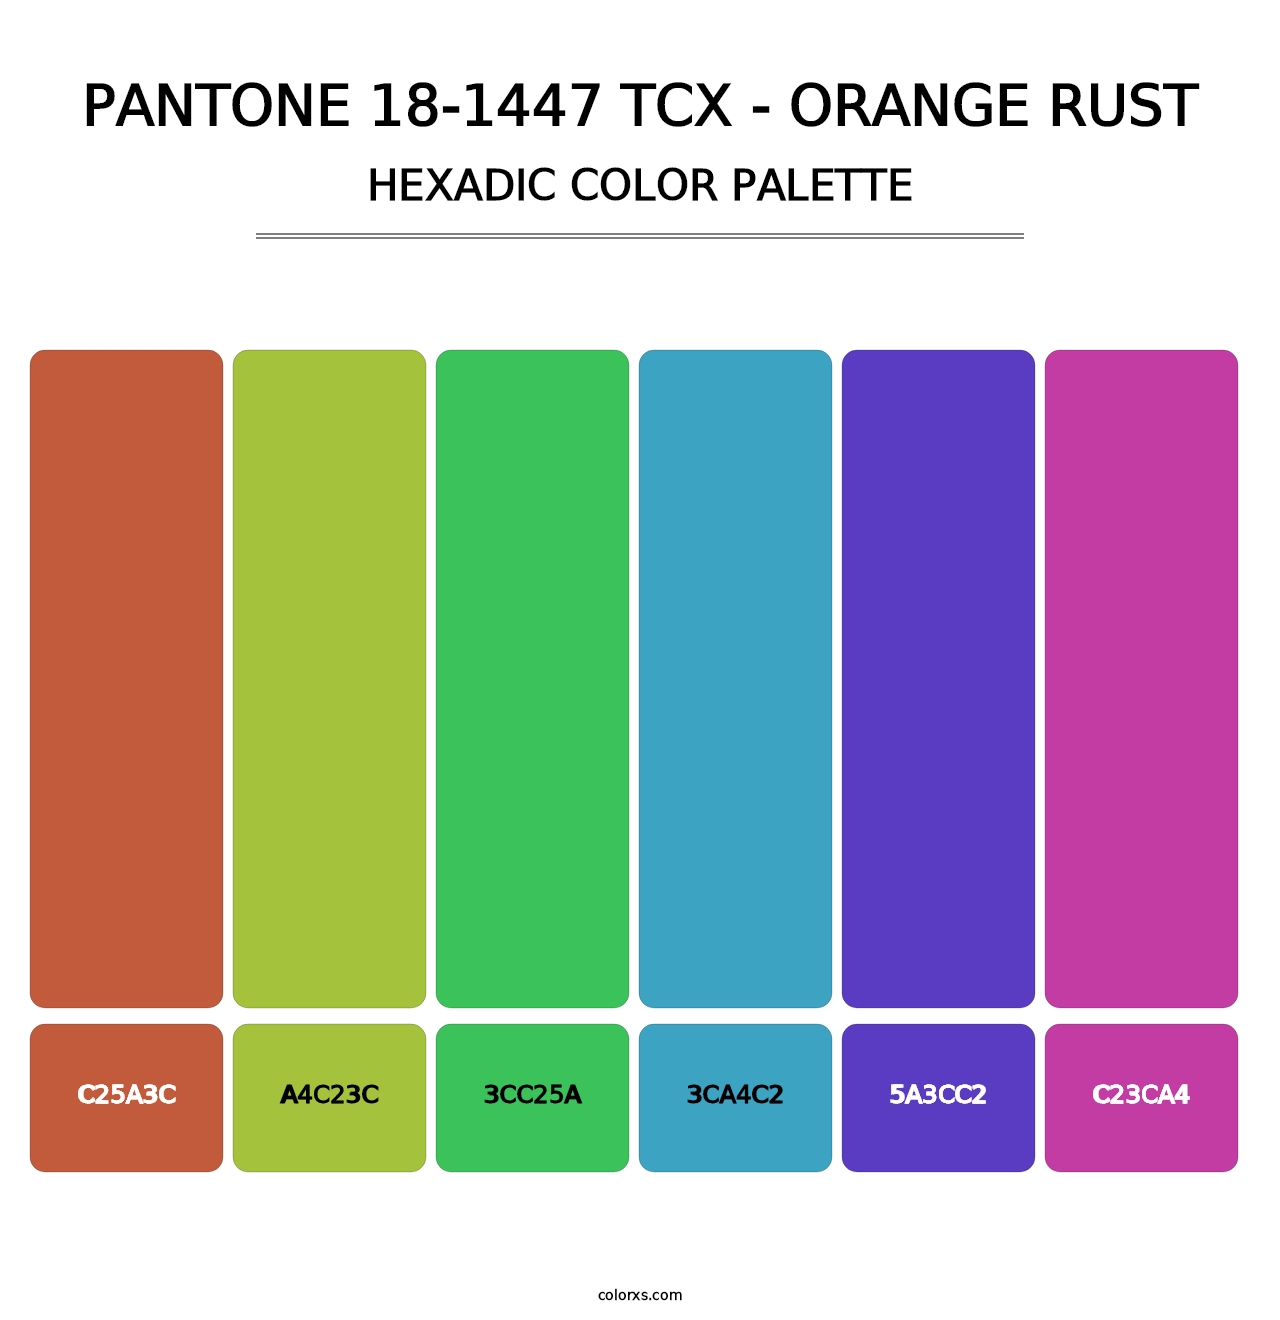 PANTONE 18-1447 TCX - Orange Rust - Hexadic Color Palette